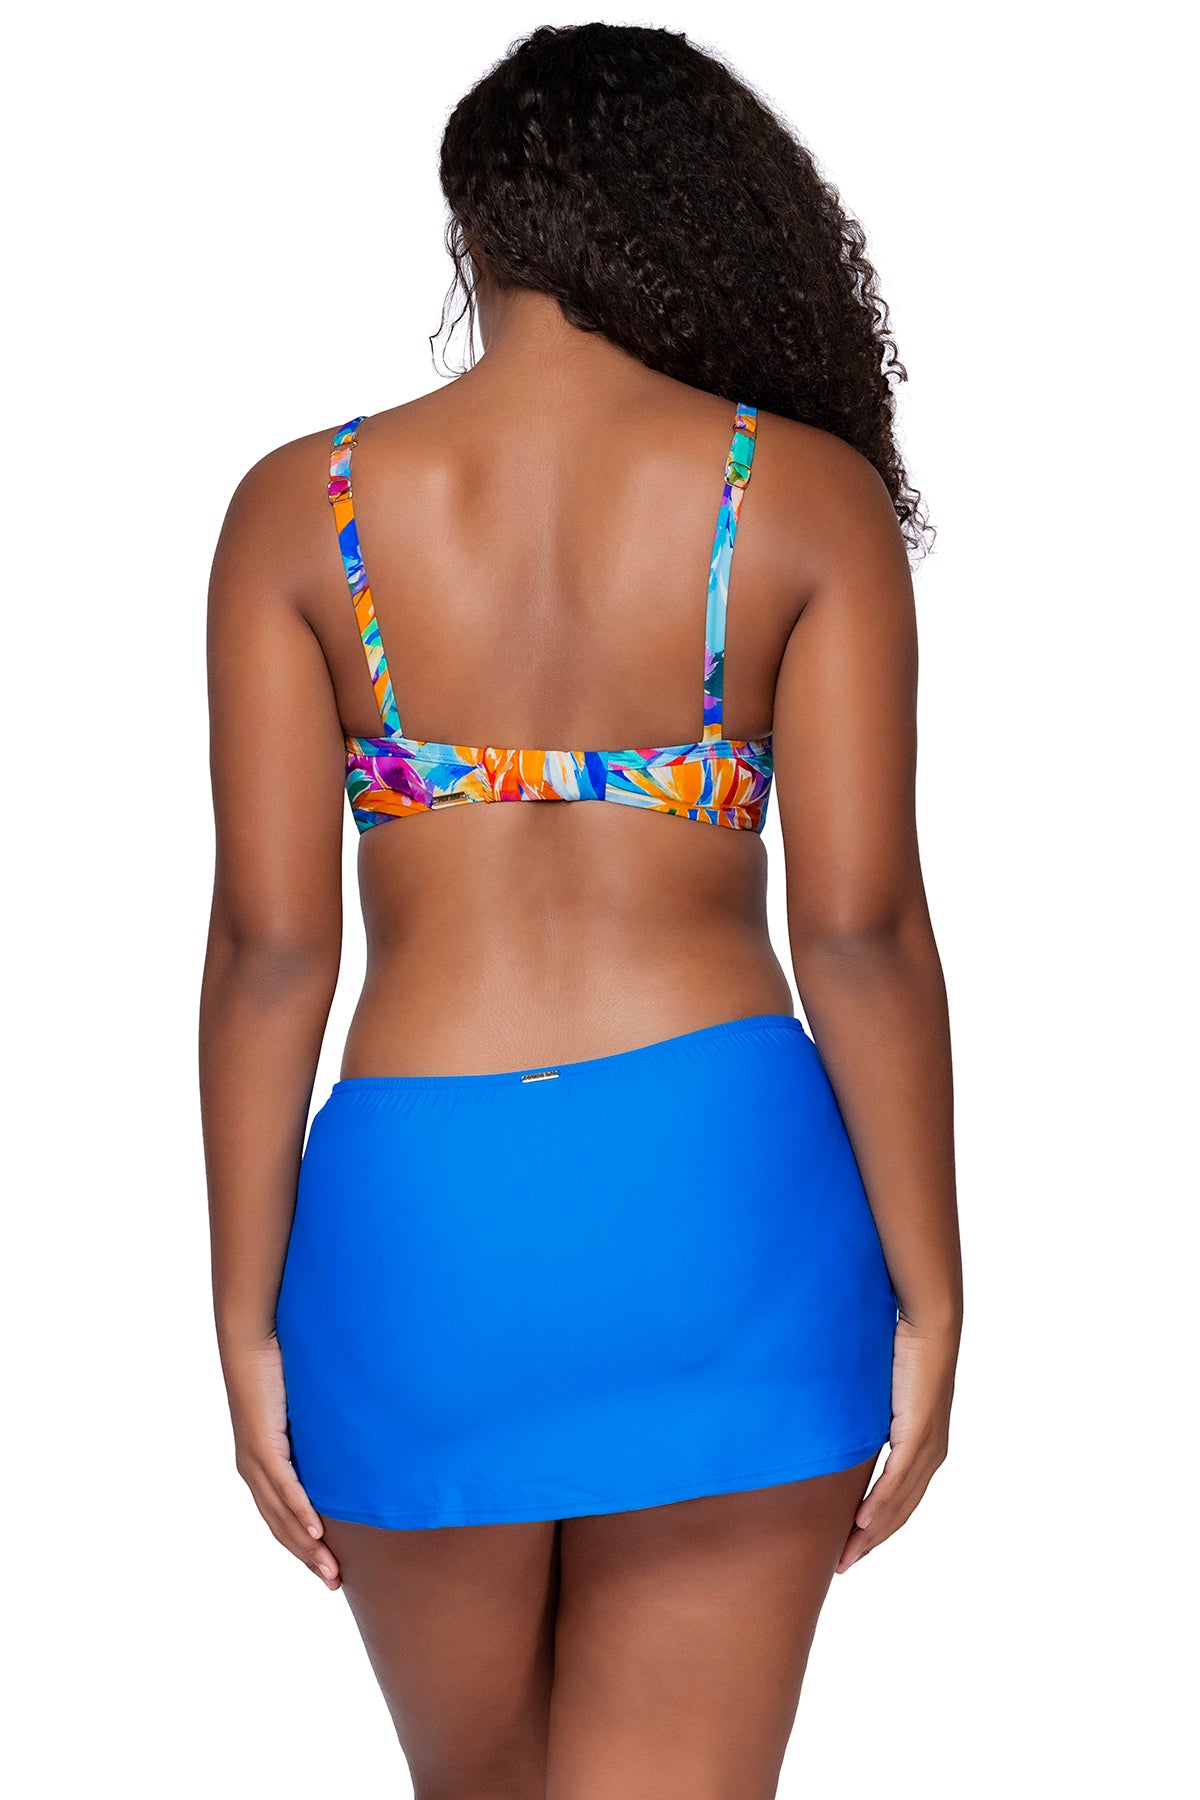 Back view of Sunsets Alegria Crossroads Underwire bikini top with Electric Blue Kokomo Swim Skirt, featuring alternate model